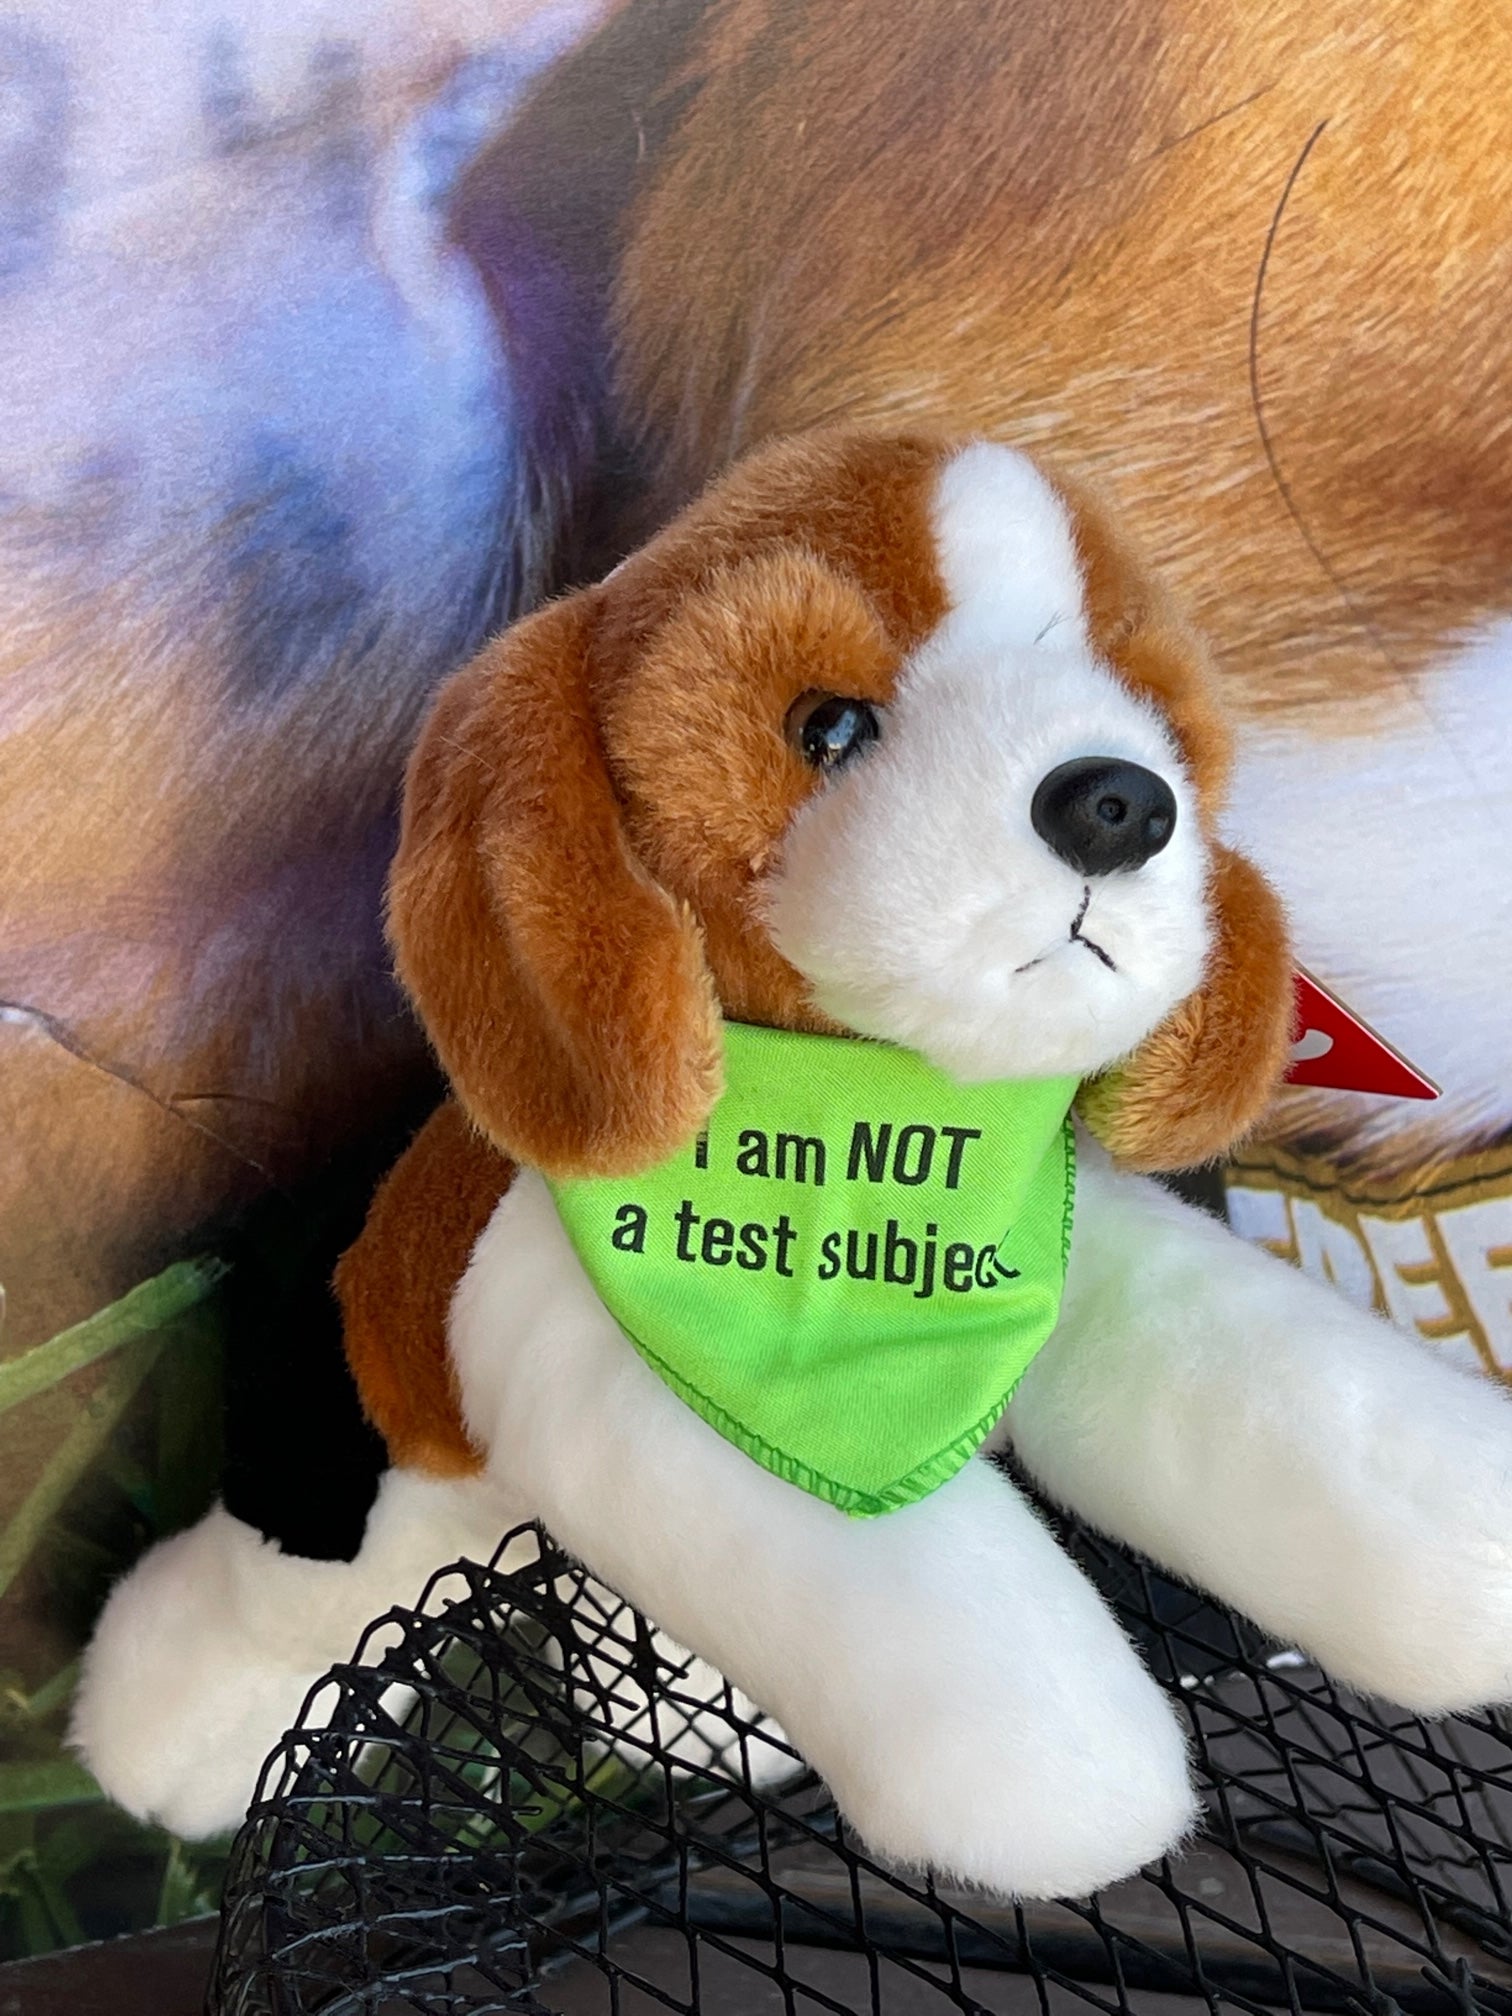 Sniff Beagle 5” Stuffed Plush Animal from Animalden